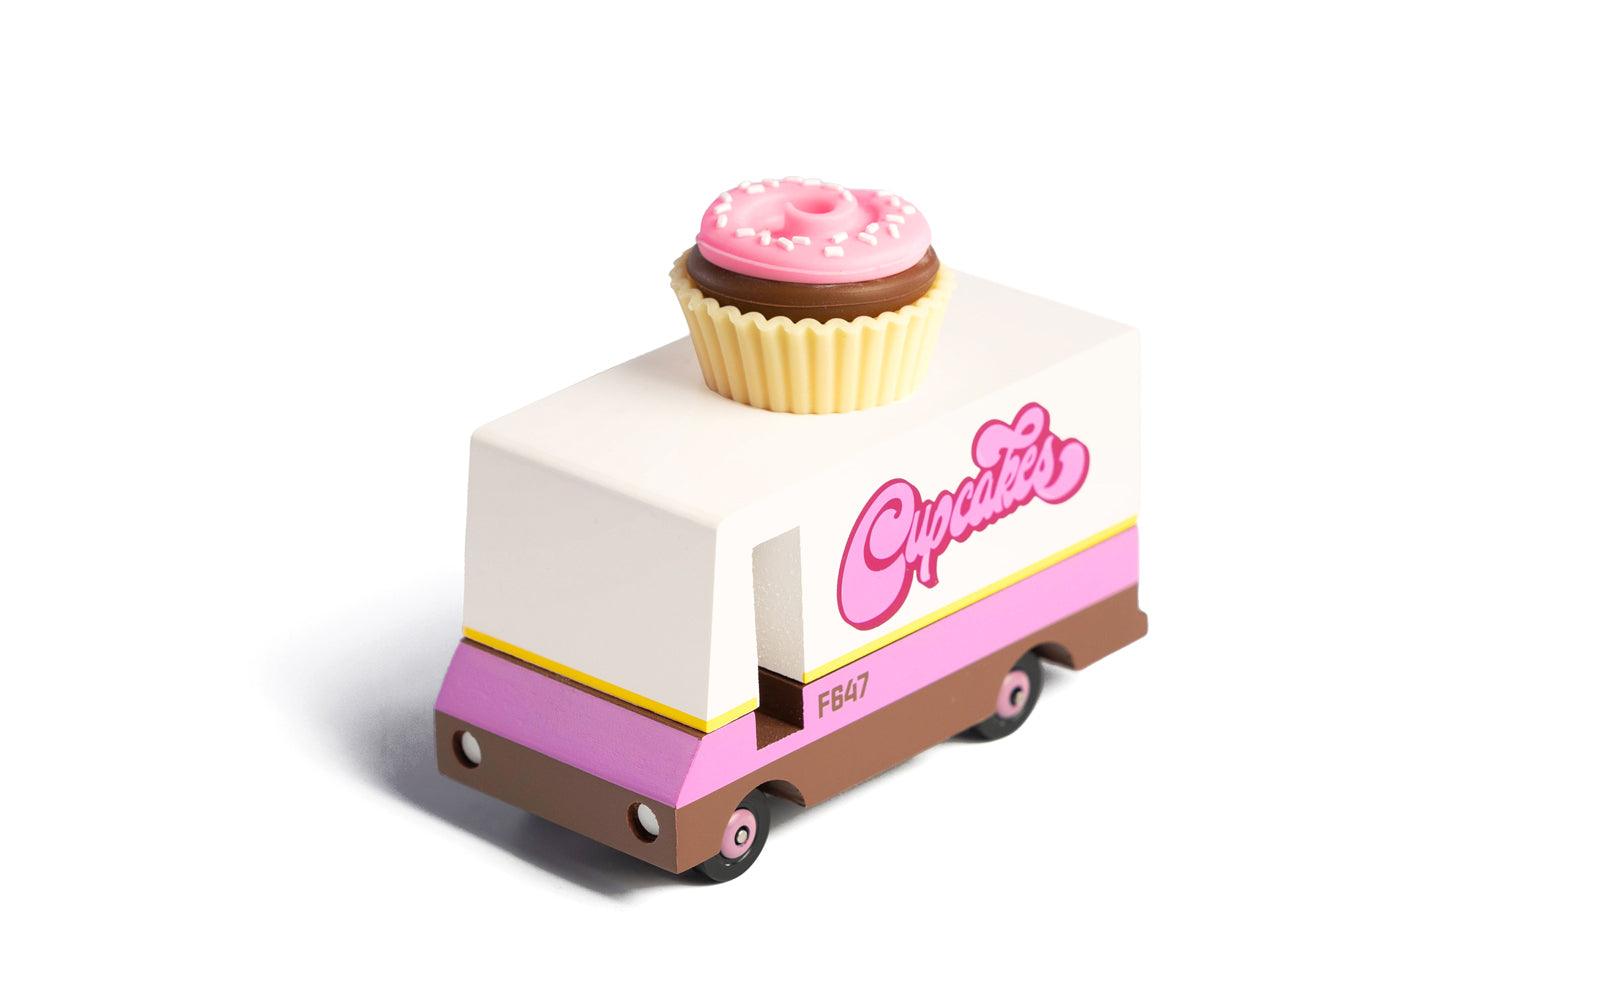 Cupcake_Qfront